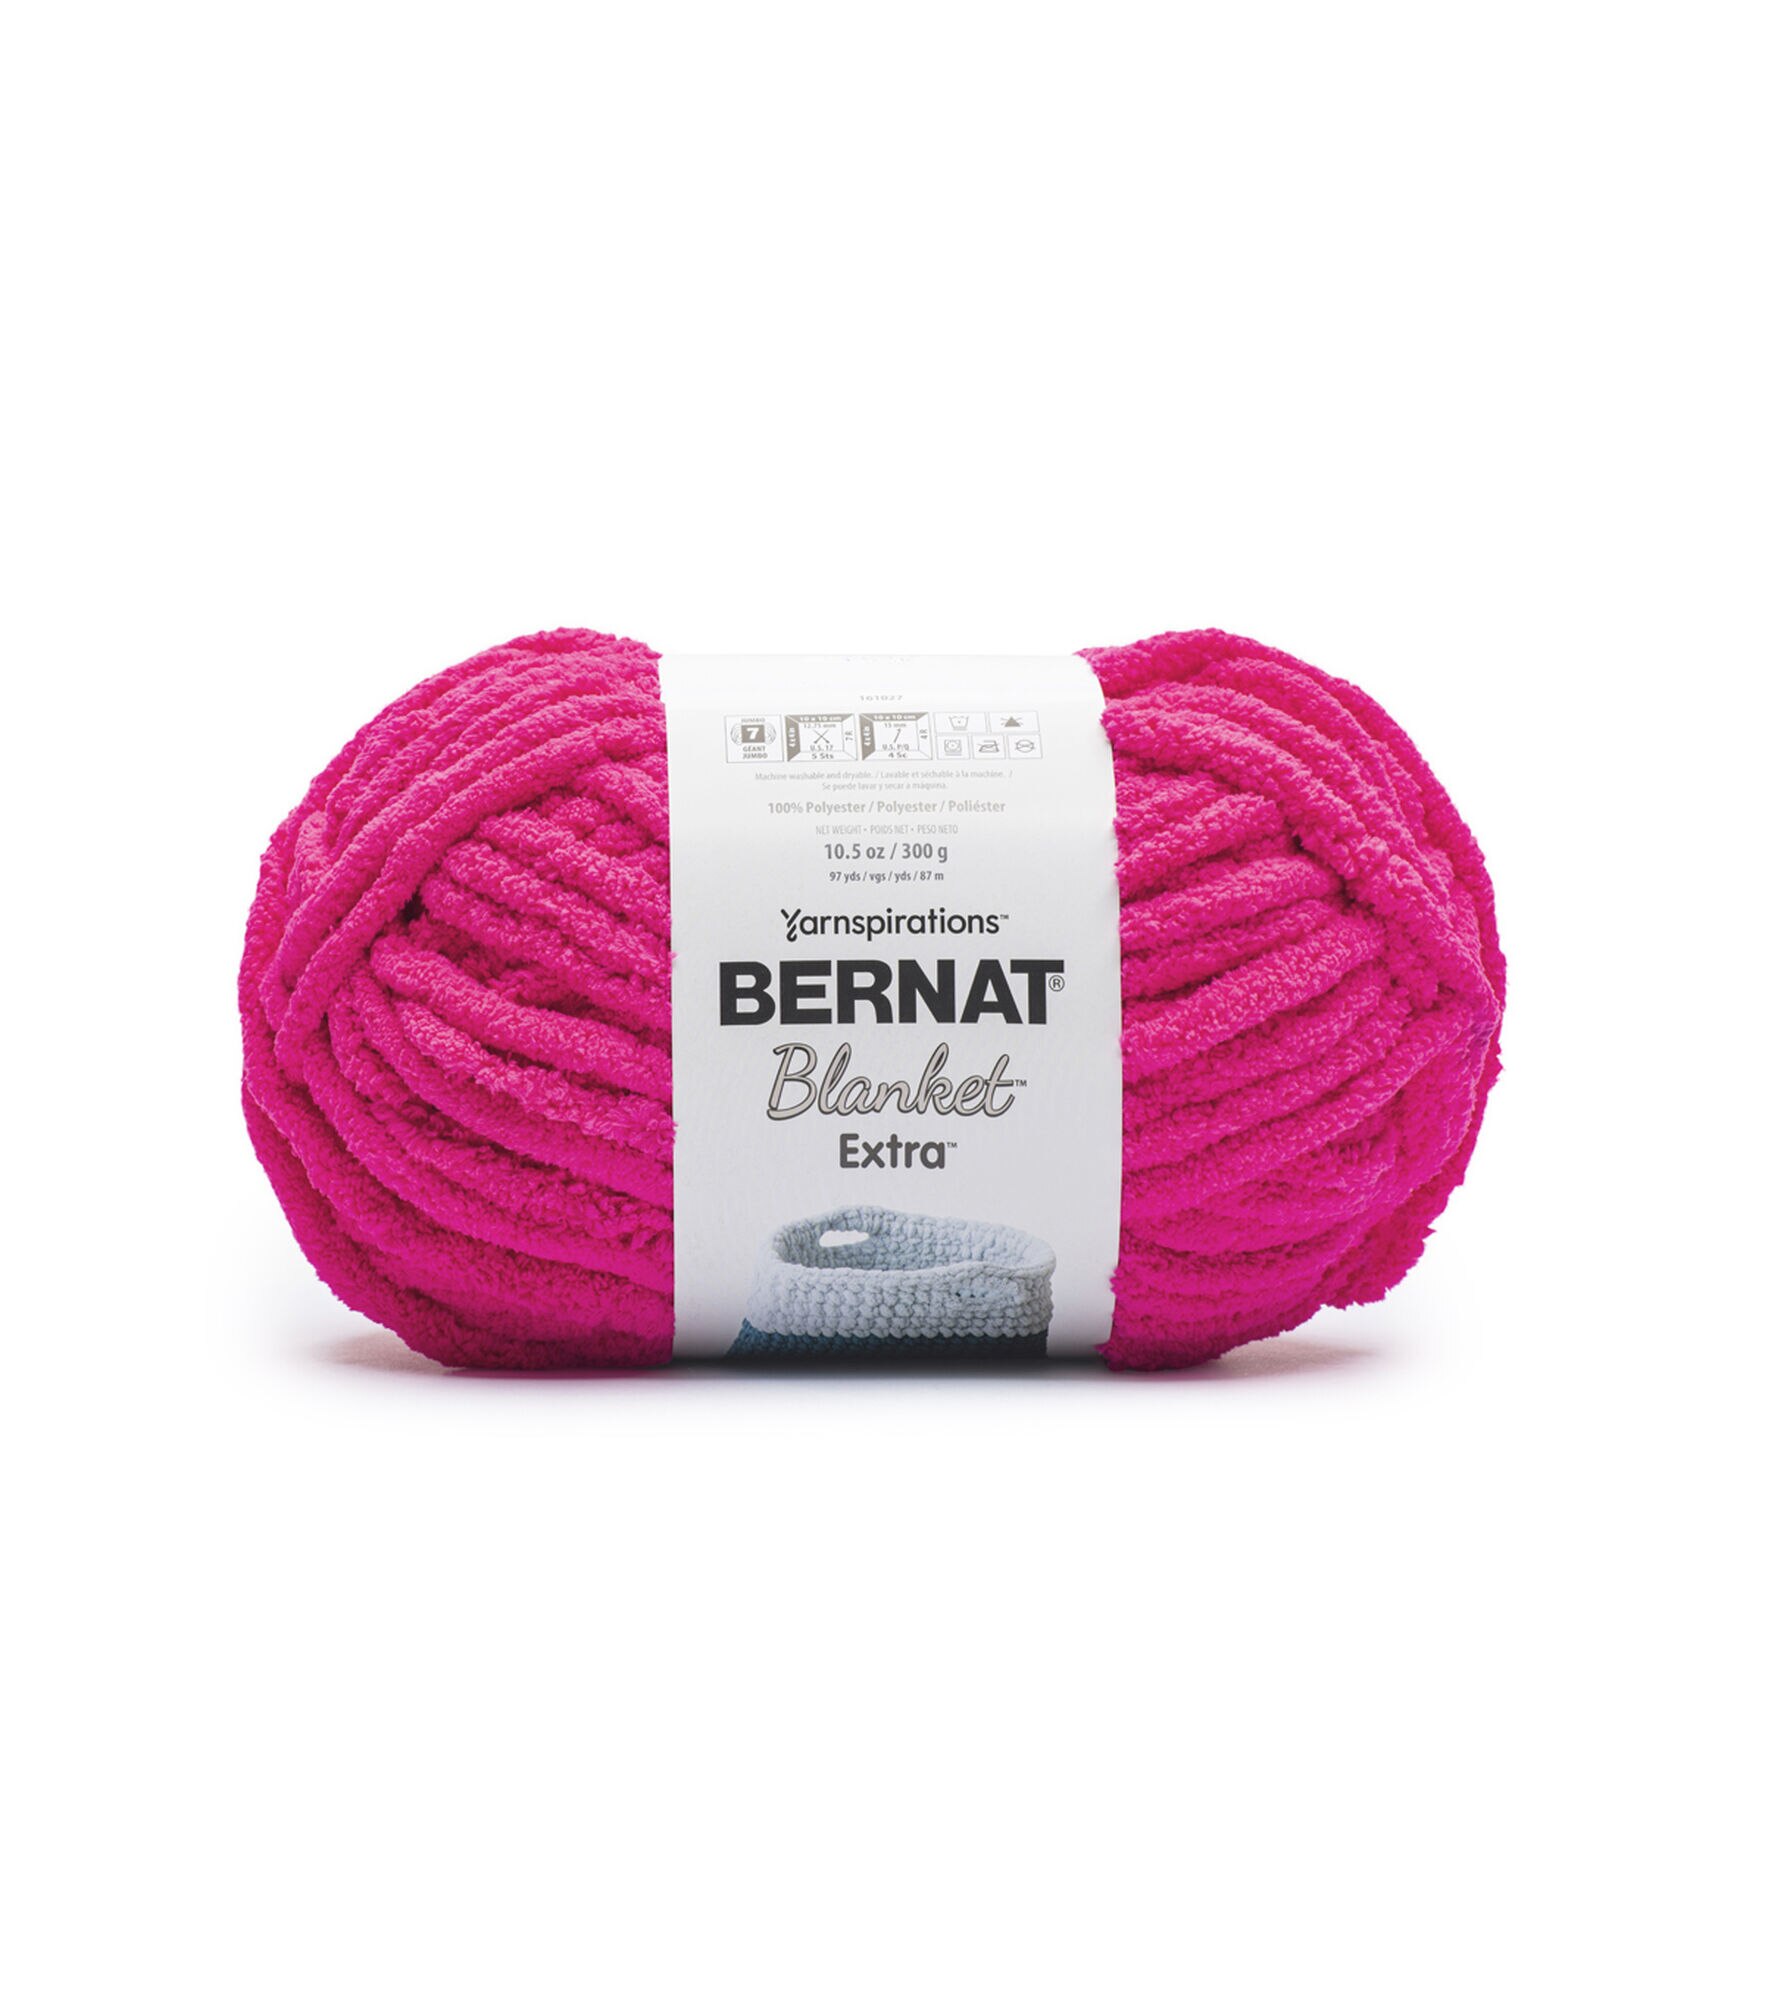 Bernat Blanket Extra Yarn (300g/10.5 oz), Bright Pink